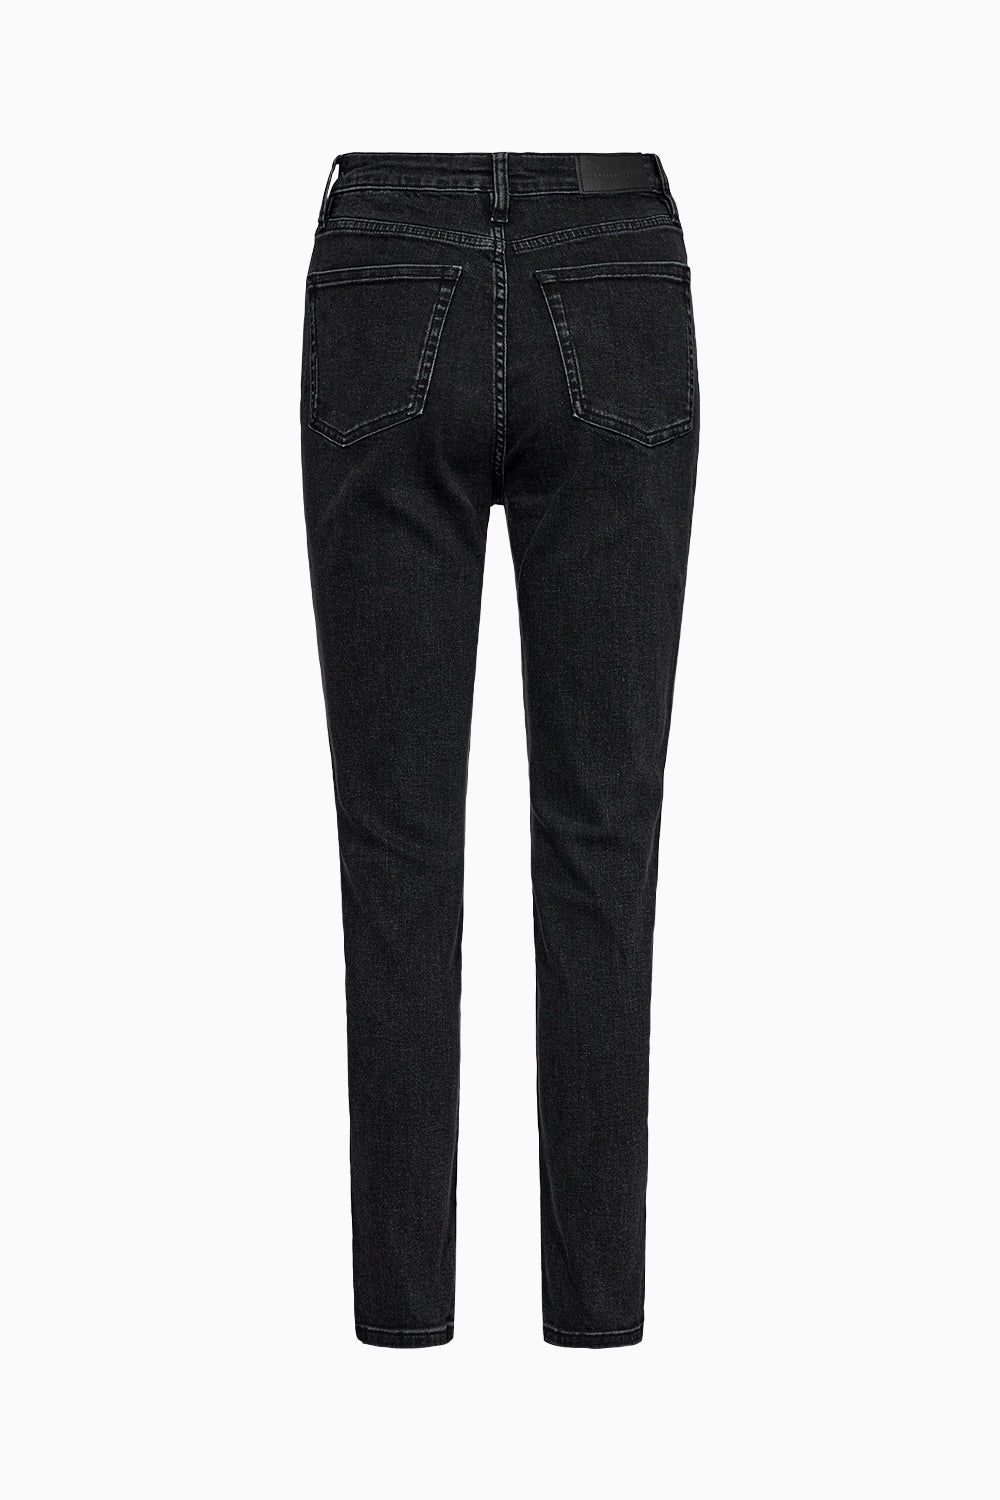 Tomorrow TMRW Hepburn Jeans - Original Black Jeans & Pants 9 Black